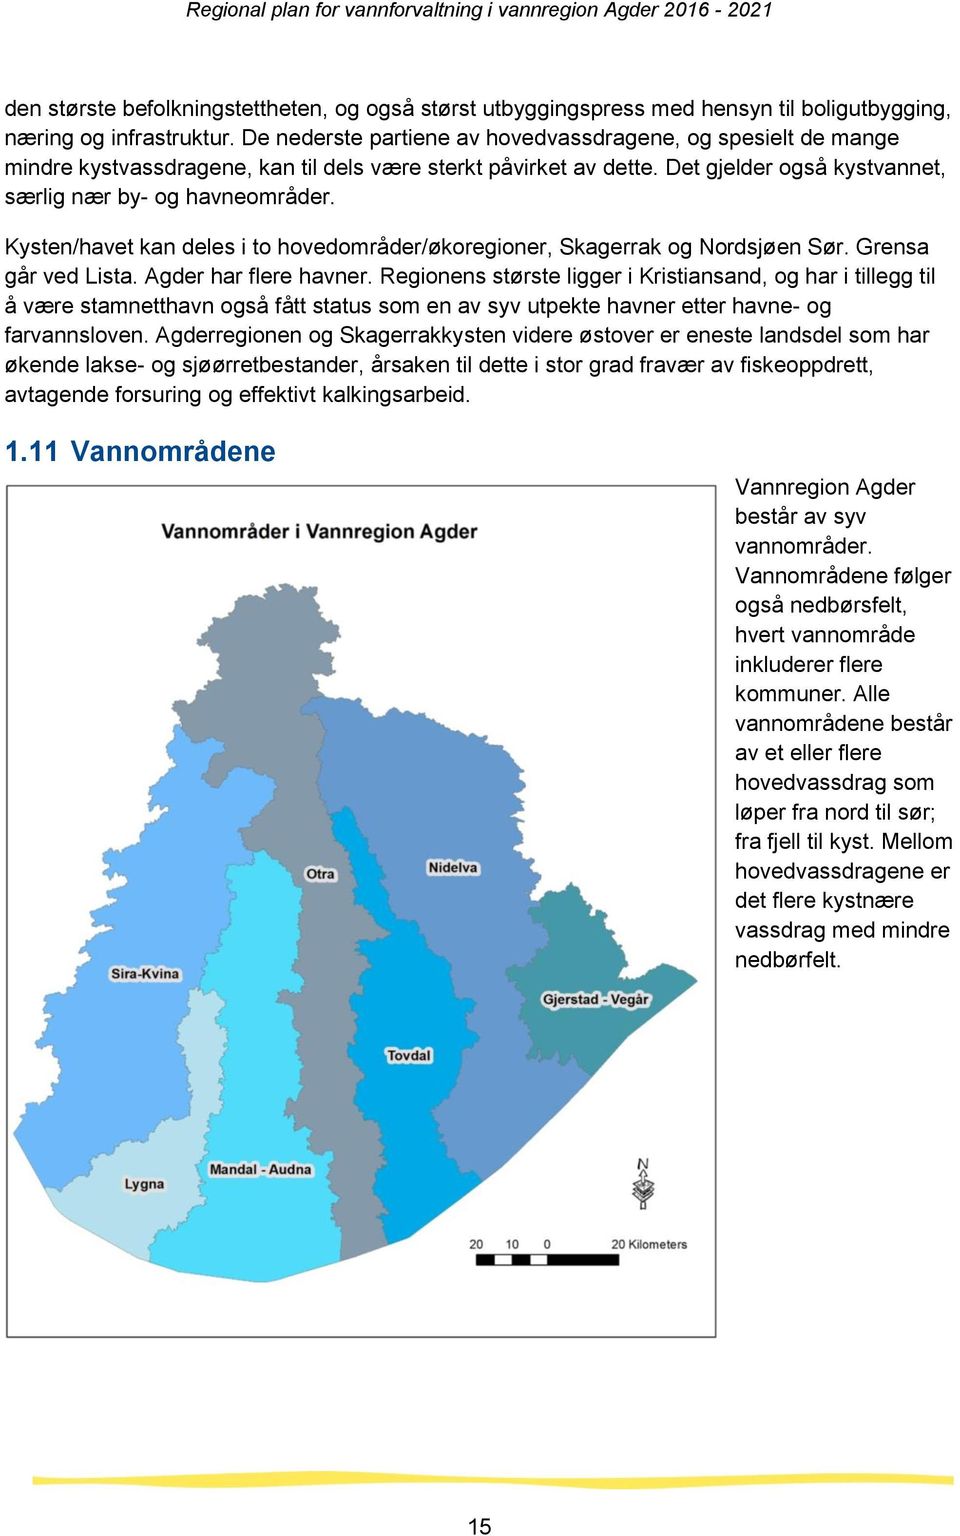 Kysten/havet kan deles i to hovedområder/økoregioner, Skagerrak og Nordsjøen Sør. Grensa går ved Lista. Agder har flere havner.